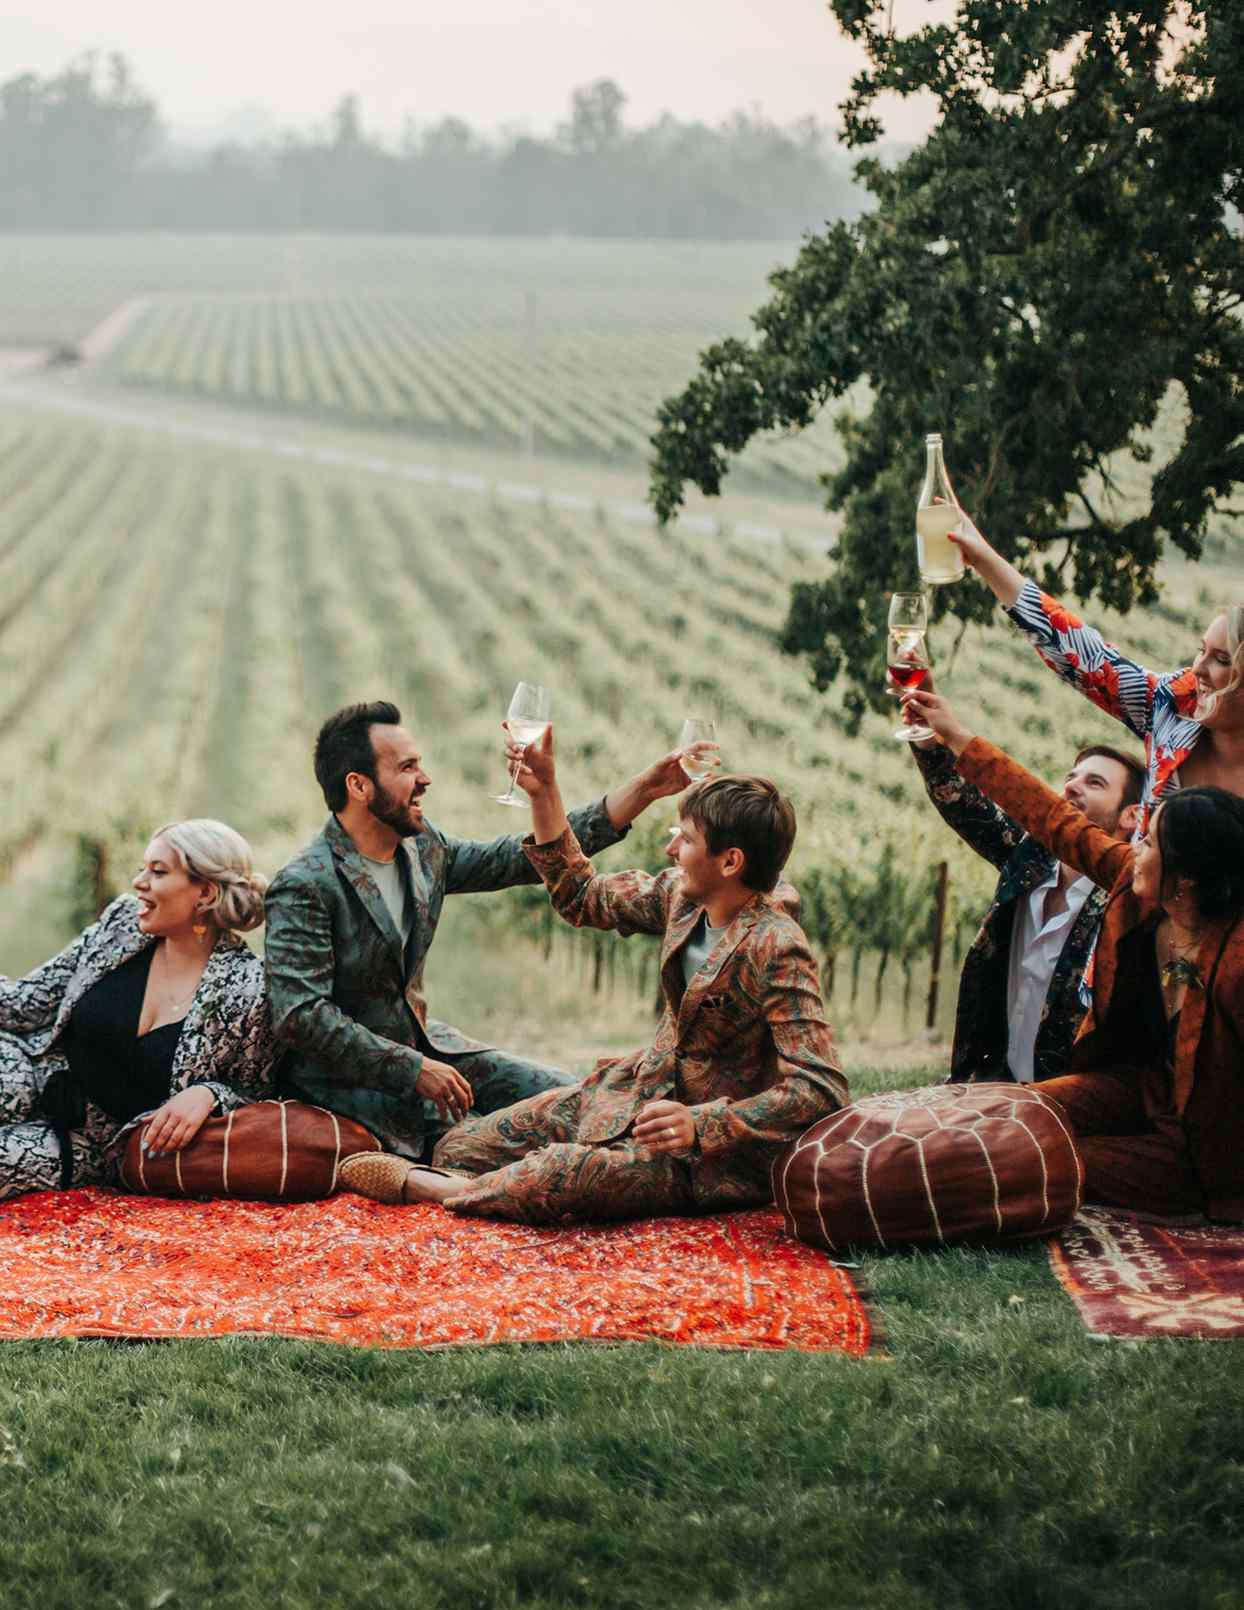 austin alex wedding couple toasting on Moroccan rugs